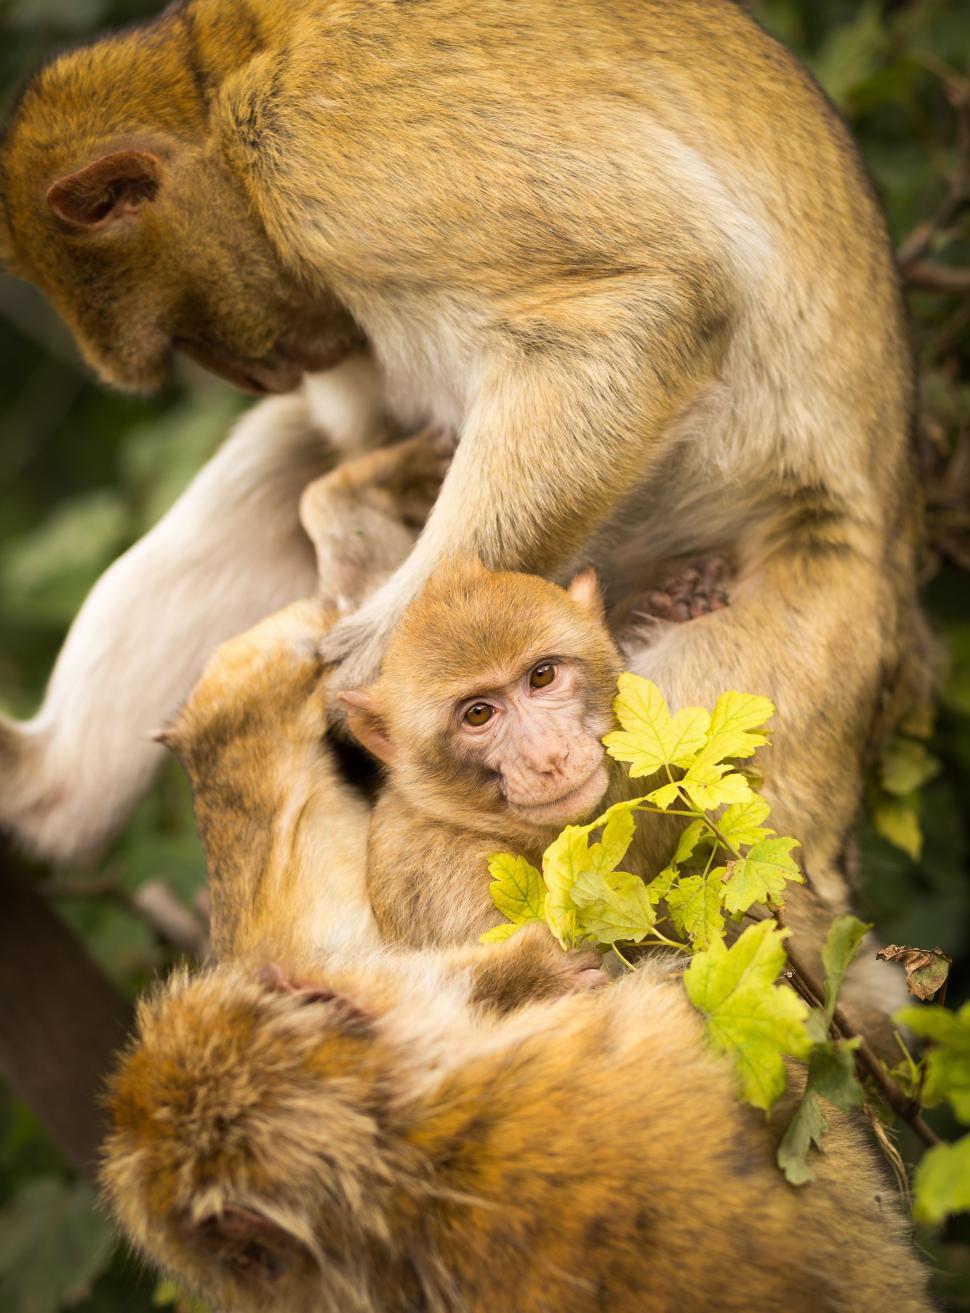 Free Image of Nature monkey primate gibbon capuchin squirrel monkey ape proboscis monkey 